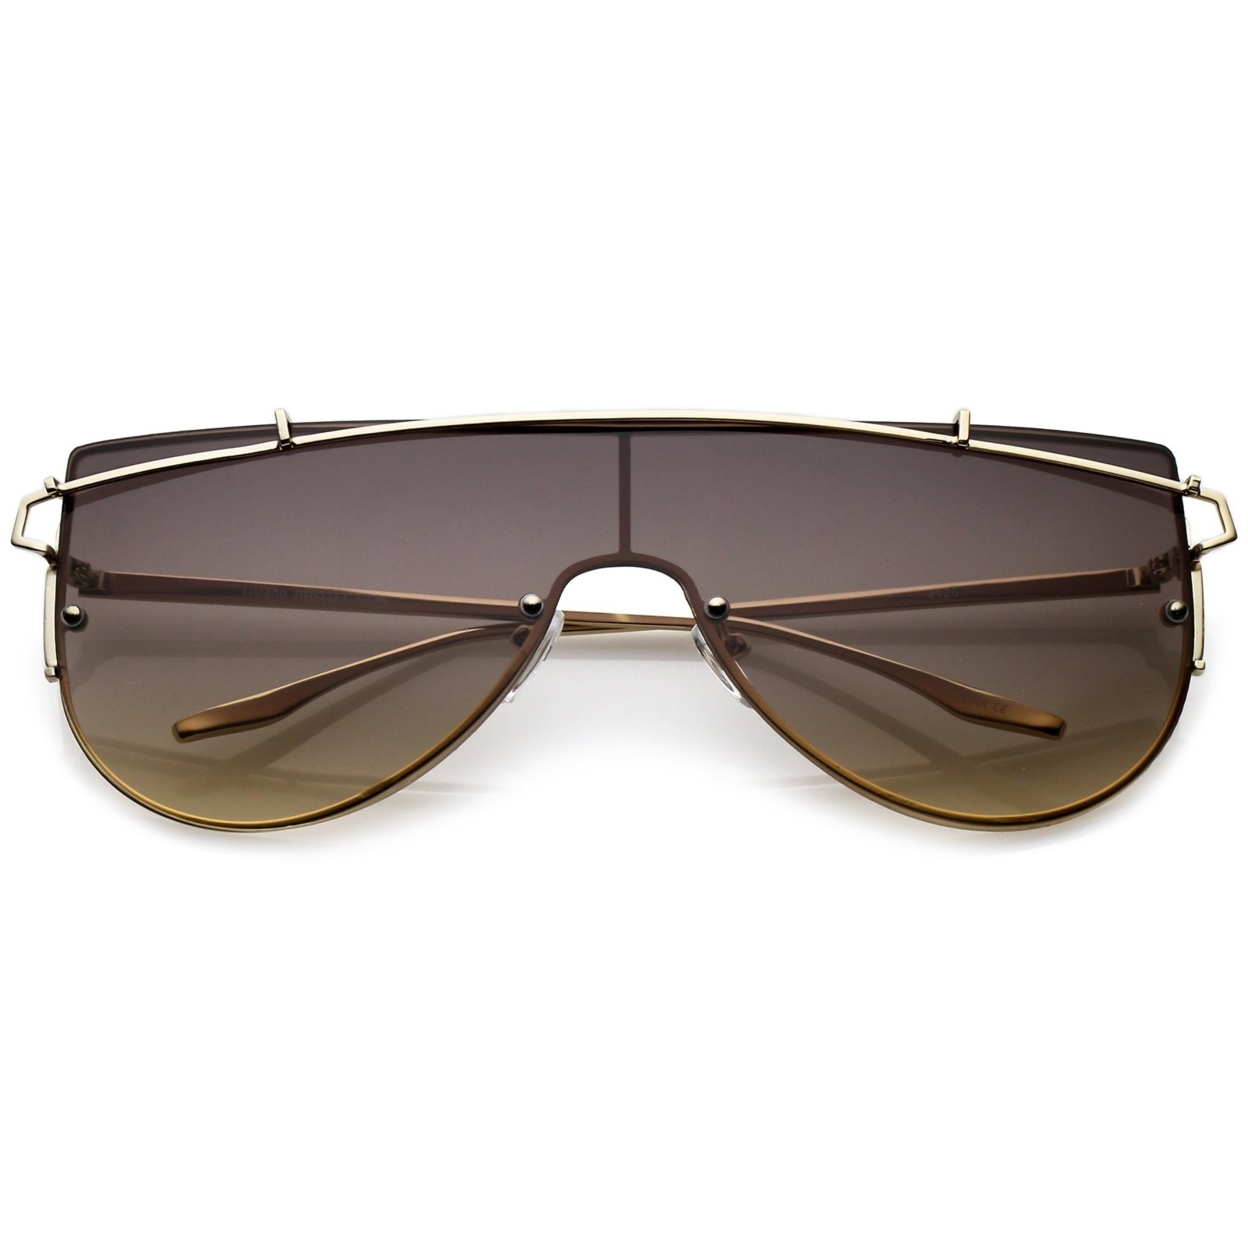 Futuristic Rimless Metal Crossbar Nuetral Colored Mono Lens Shield Sunglasses 64mm - Gold / Brown